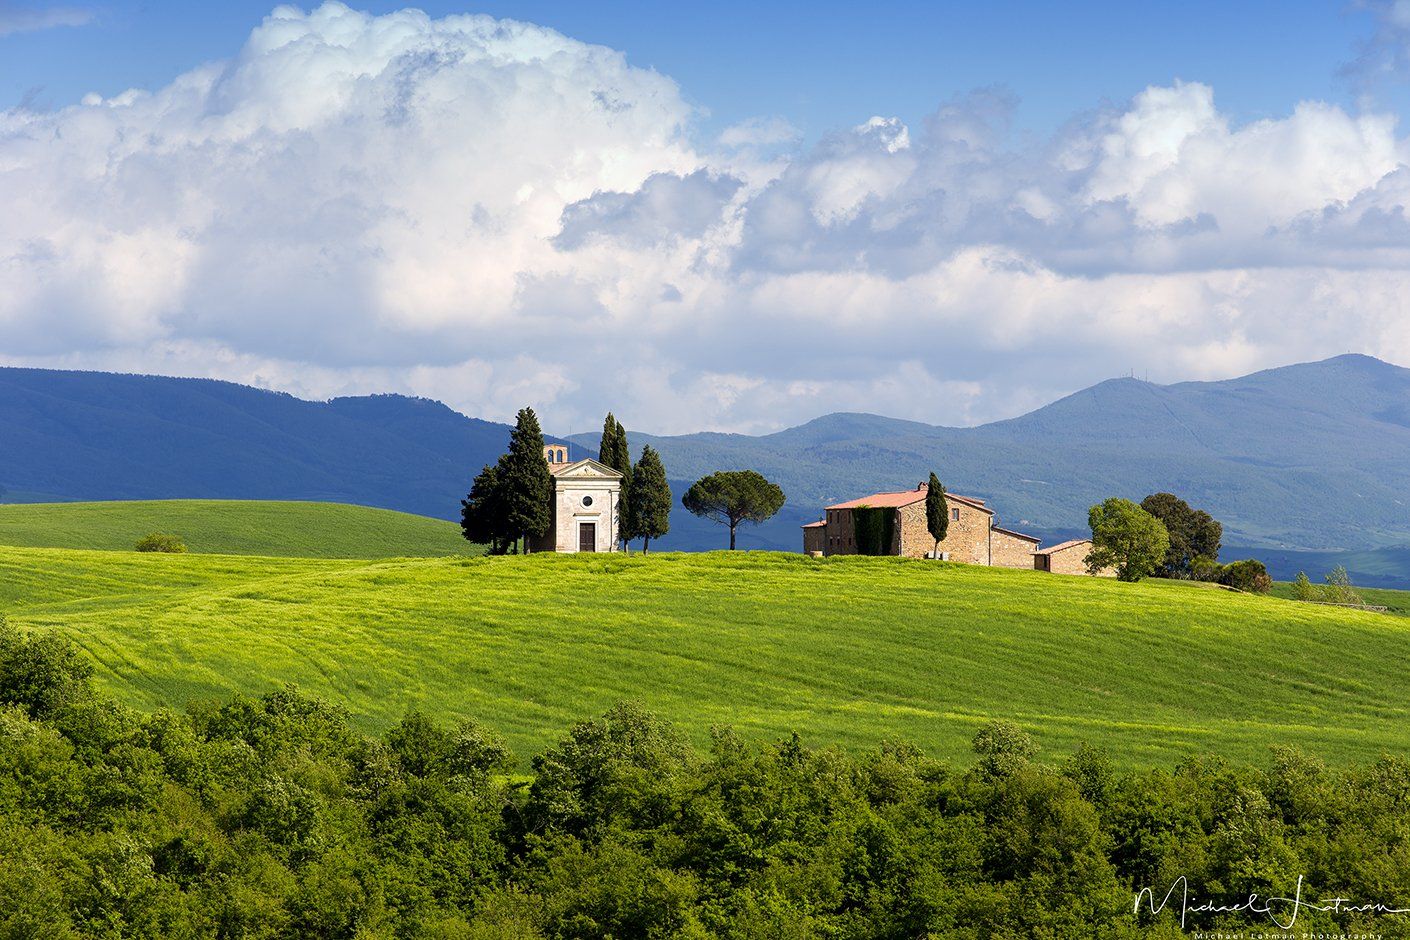 tuscany,italia,spring,green,hill,house, old, grass,sky.hills,beauty, Michael Latman